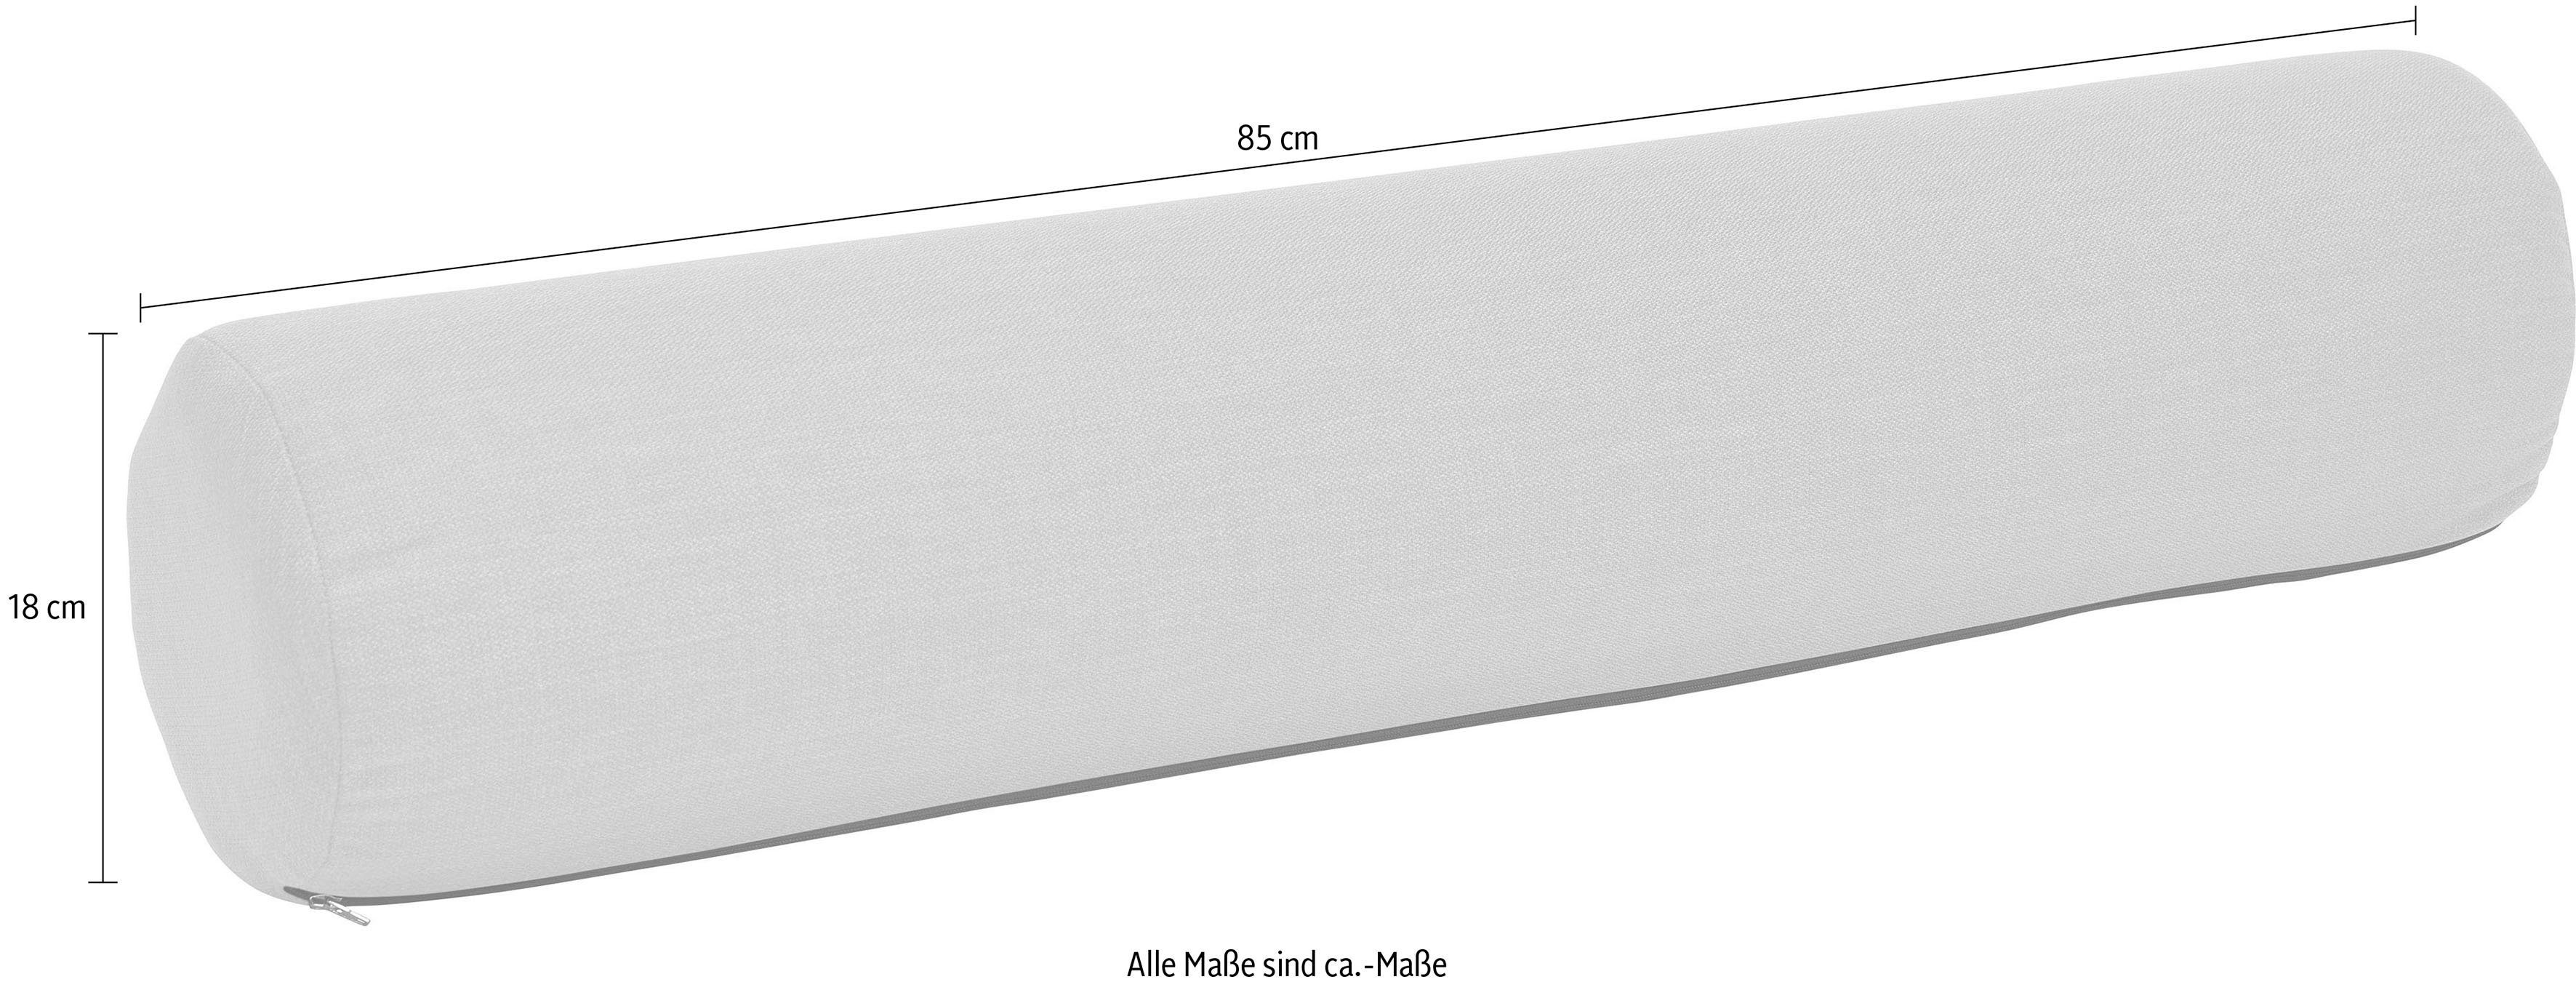 Bezugsstoffen Müller LIVING Kopfstütze SMALL in zwei RG-25-Nackenrolle, hochwertigen